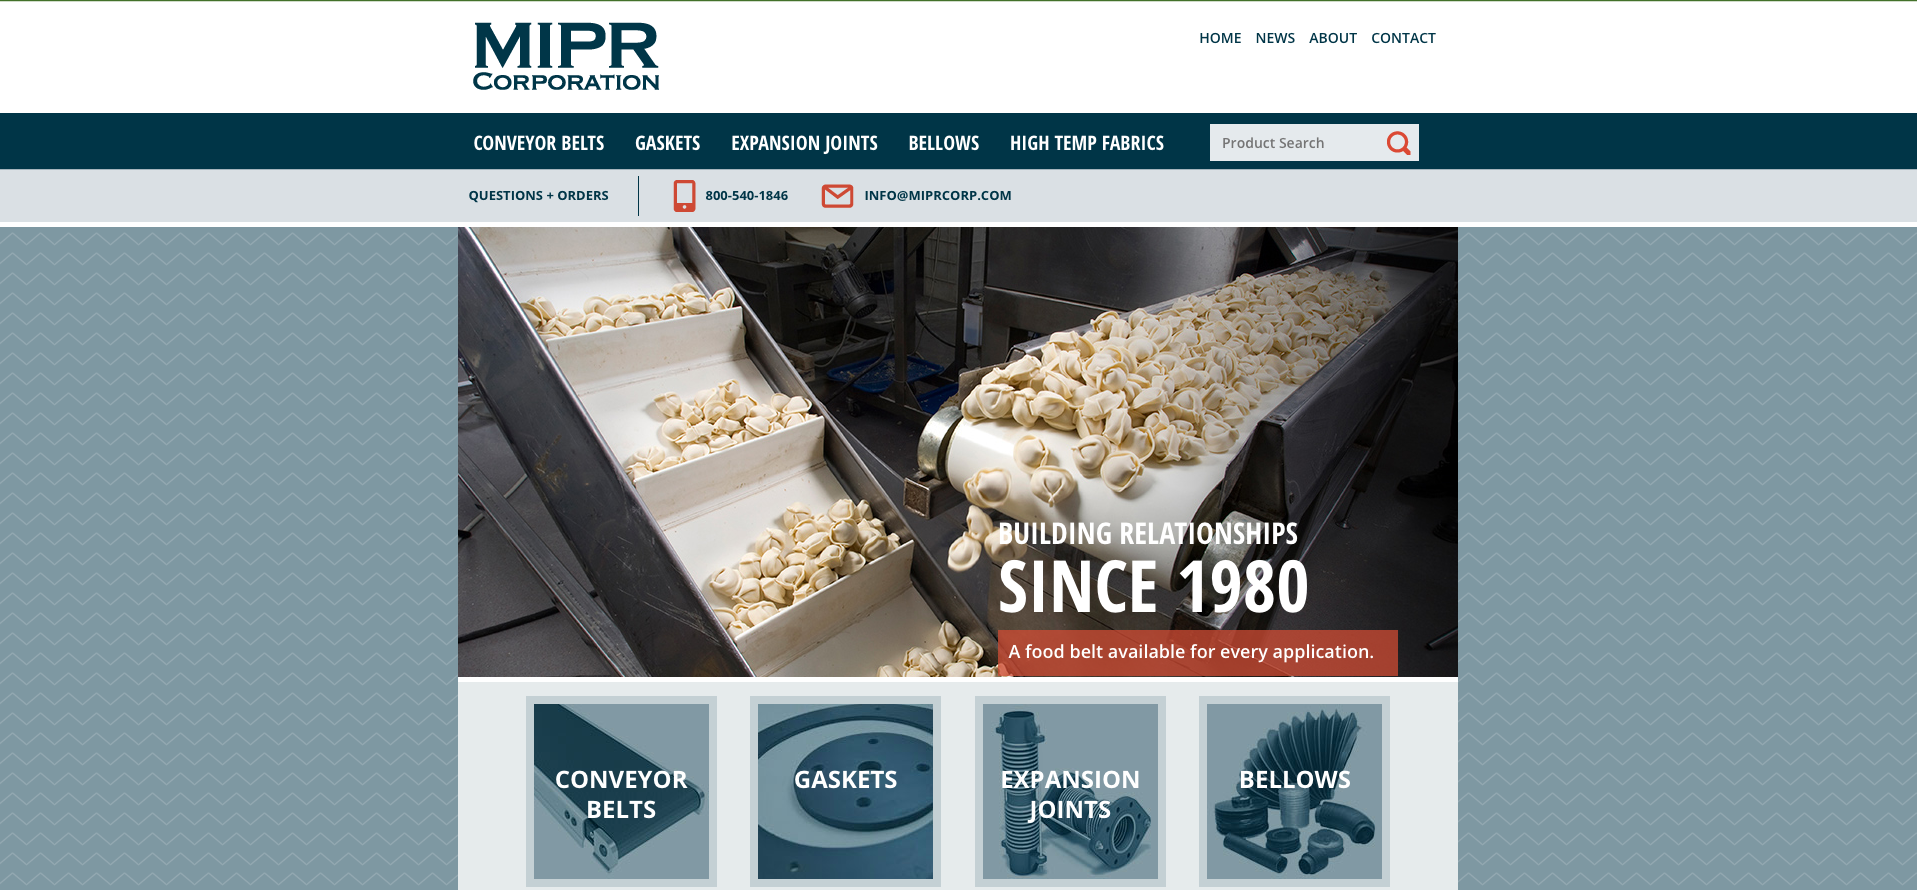 (c) Miprcorp.com